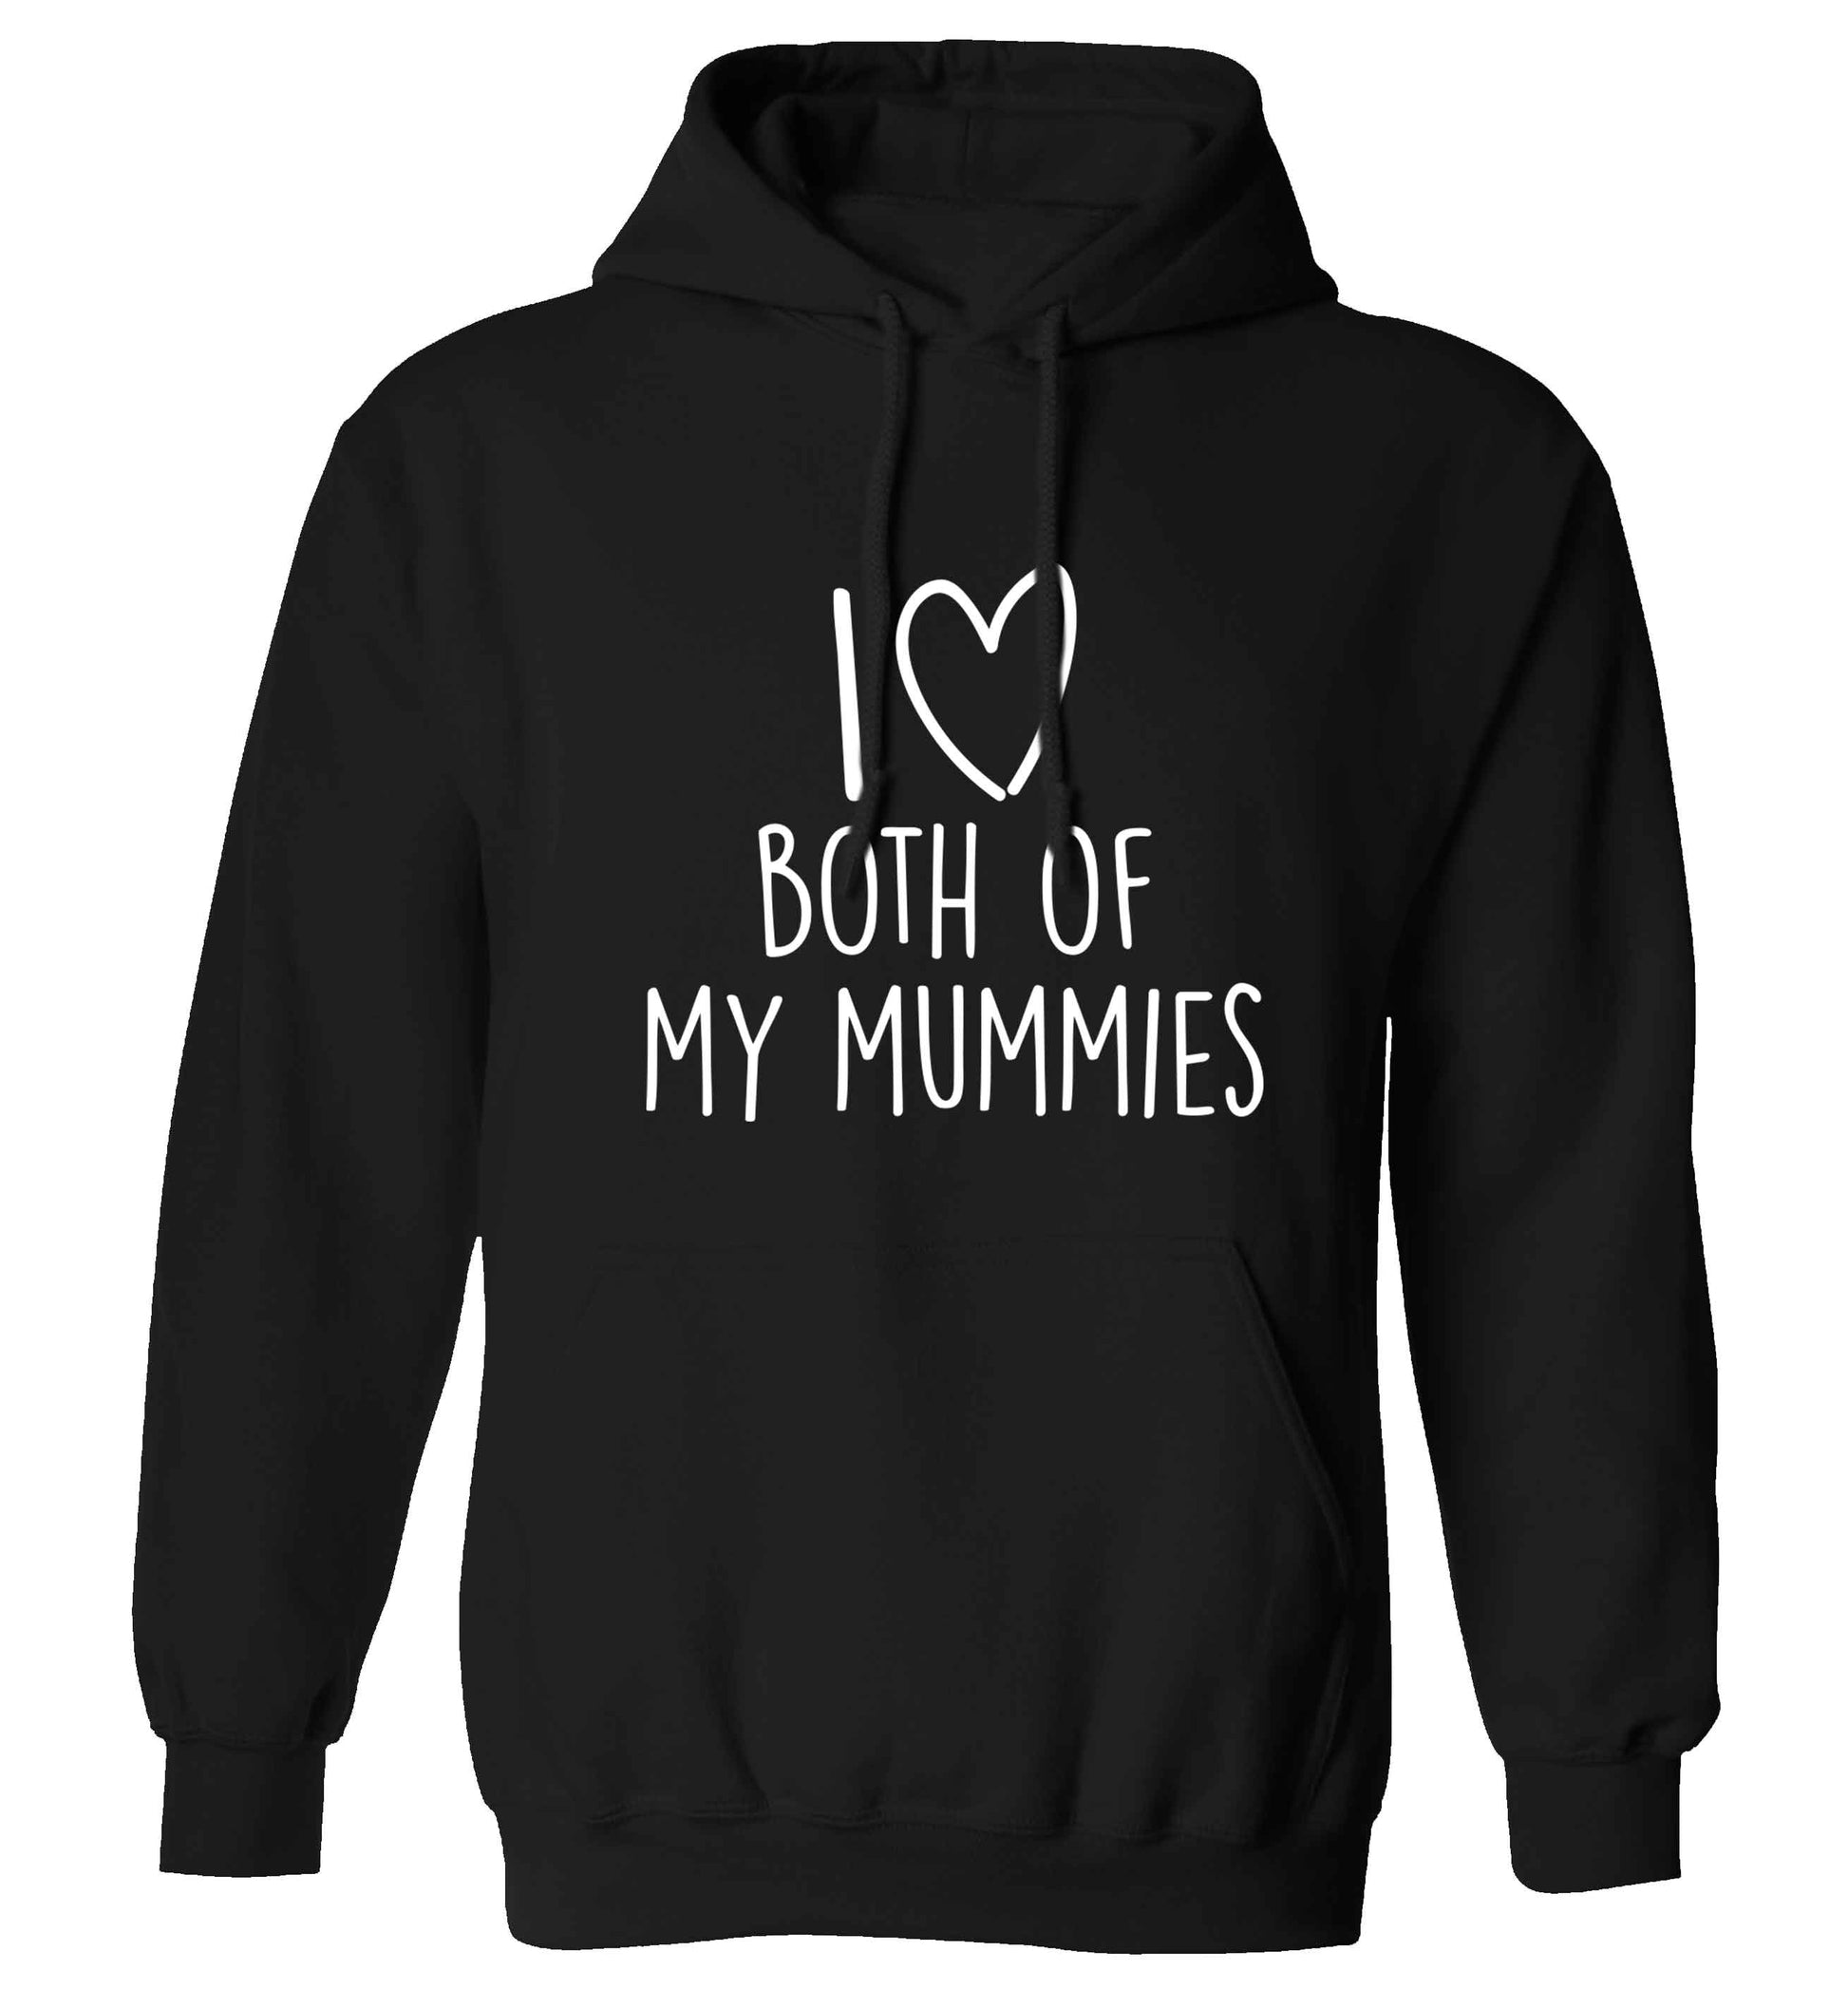 I love both of my mummies adults unisex black hoodie 2XL